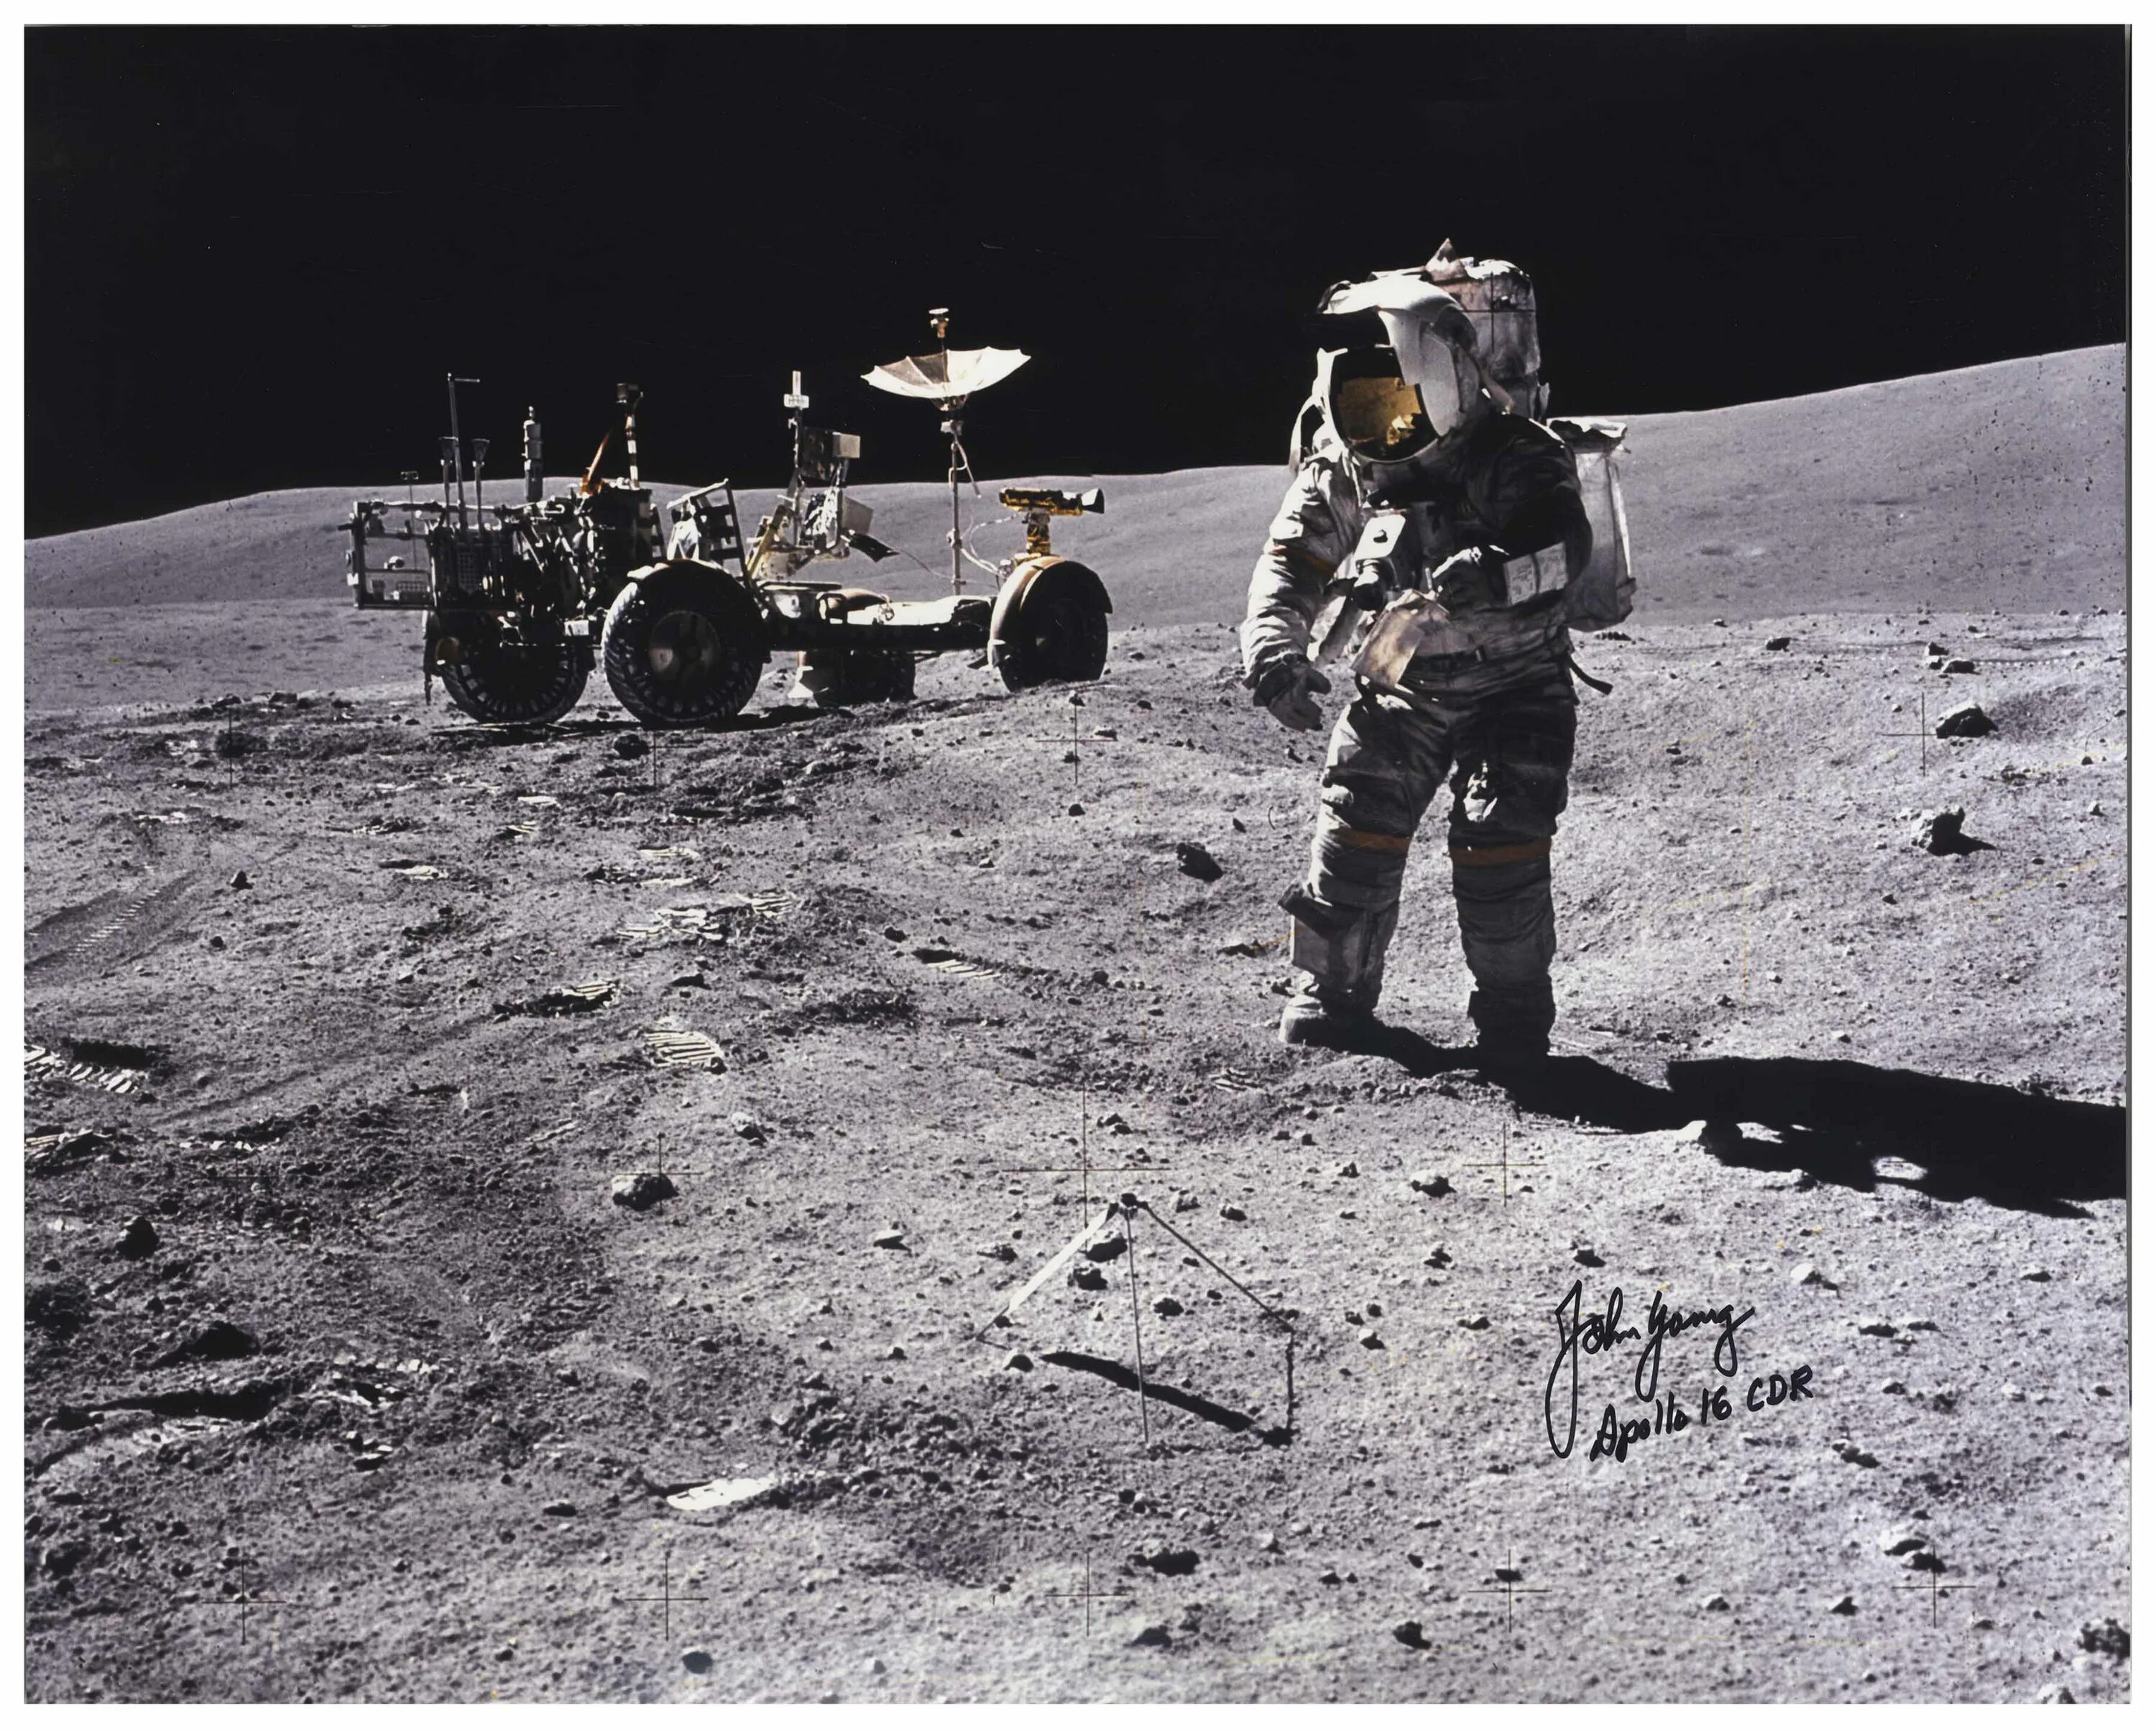 Аполлон 11 высадка. Аполло-14 астронавты на Луне. Миссия Аполлон 11. Американцы на Луне 1969. Высадка аполлона